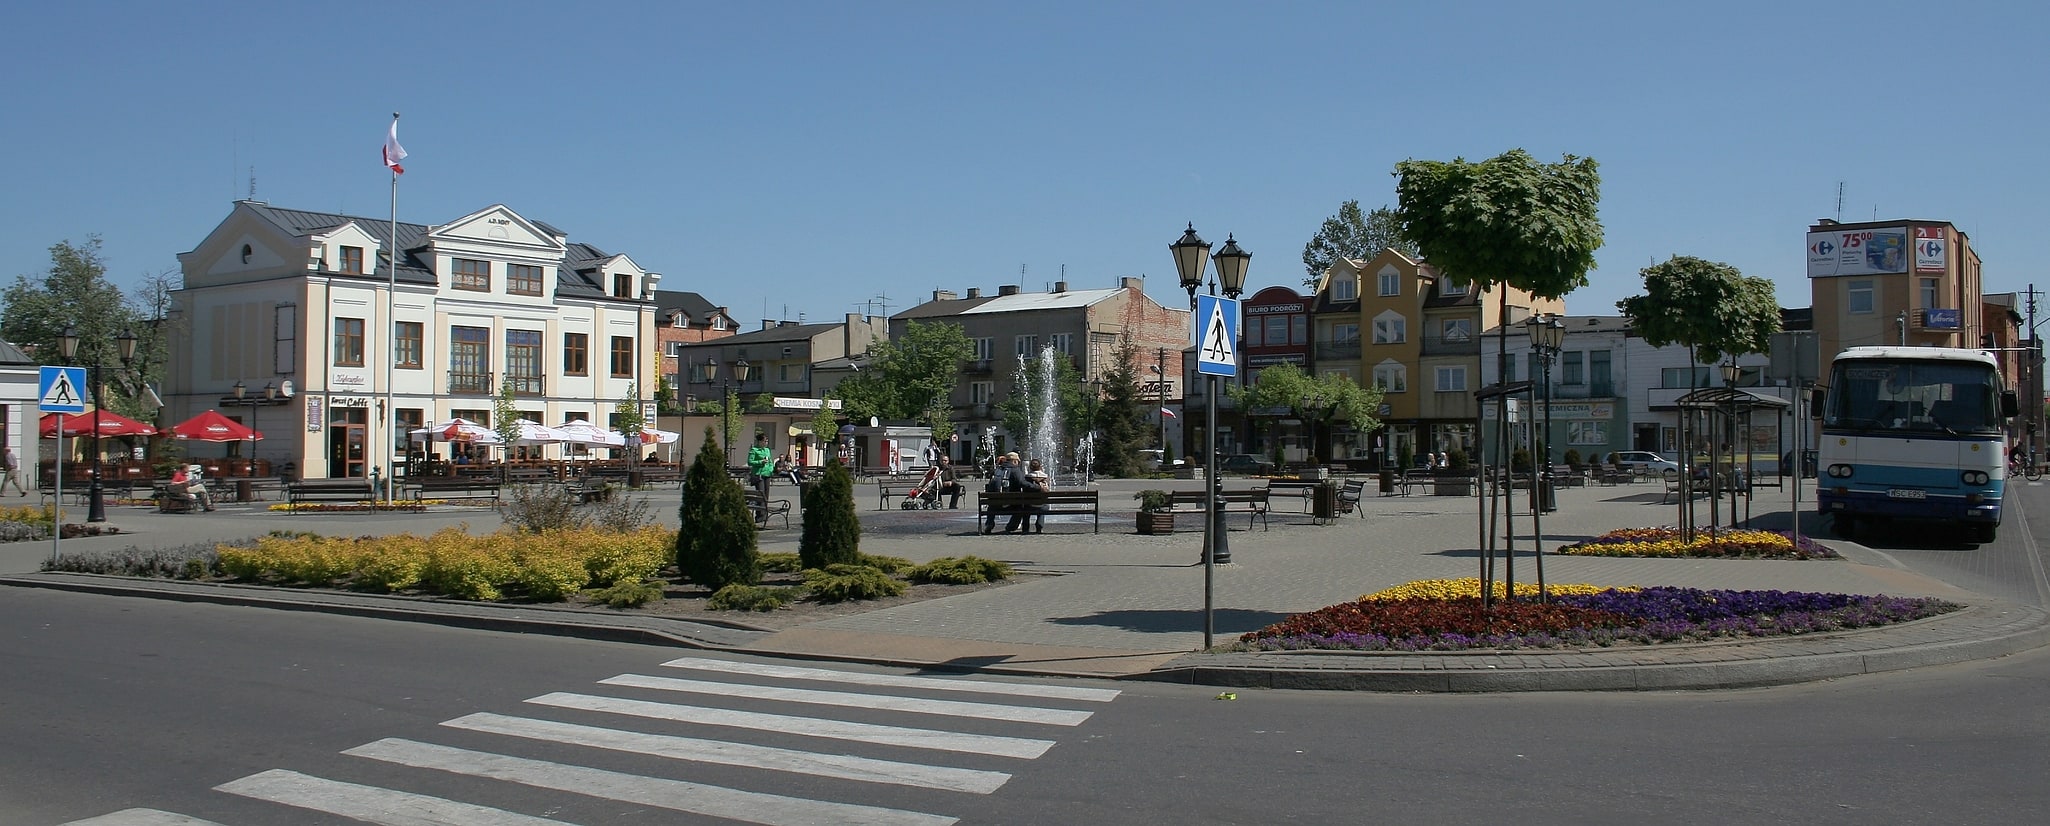 Sochaczew, Polen